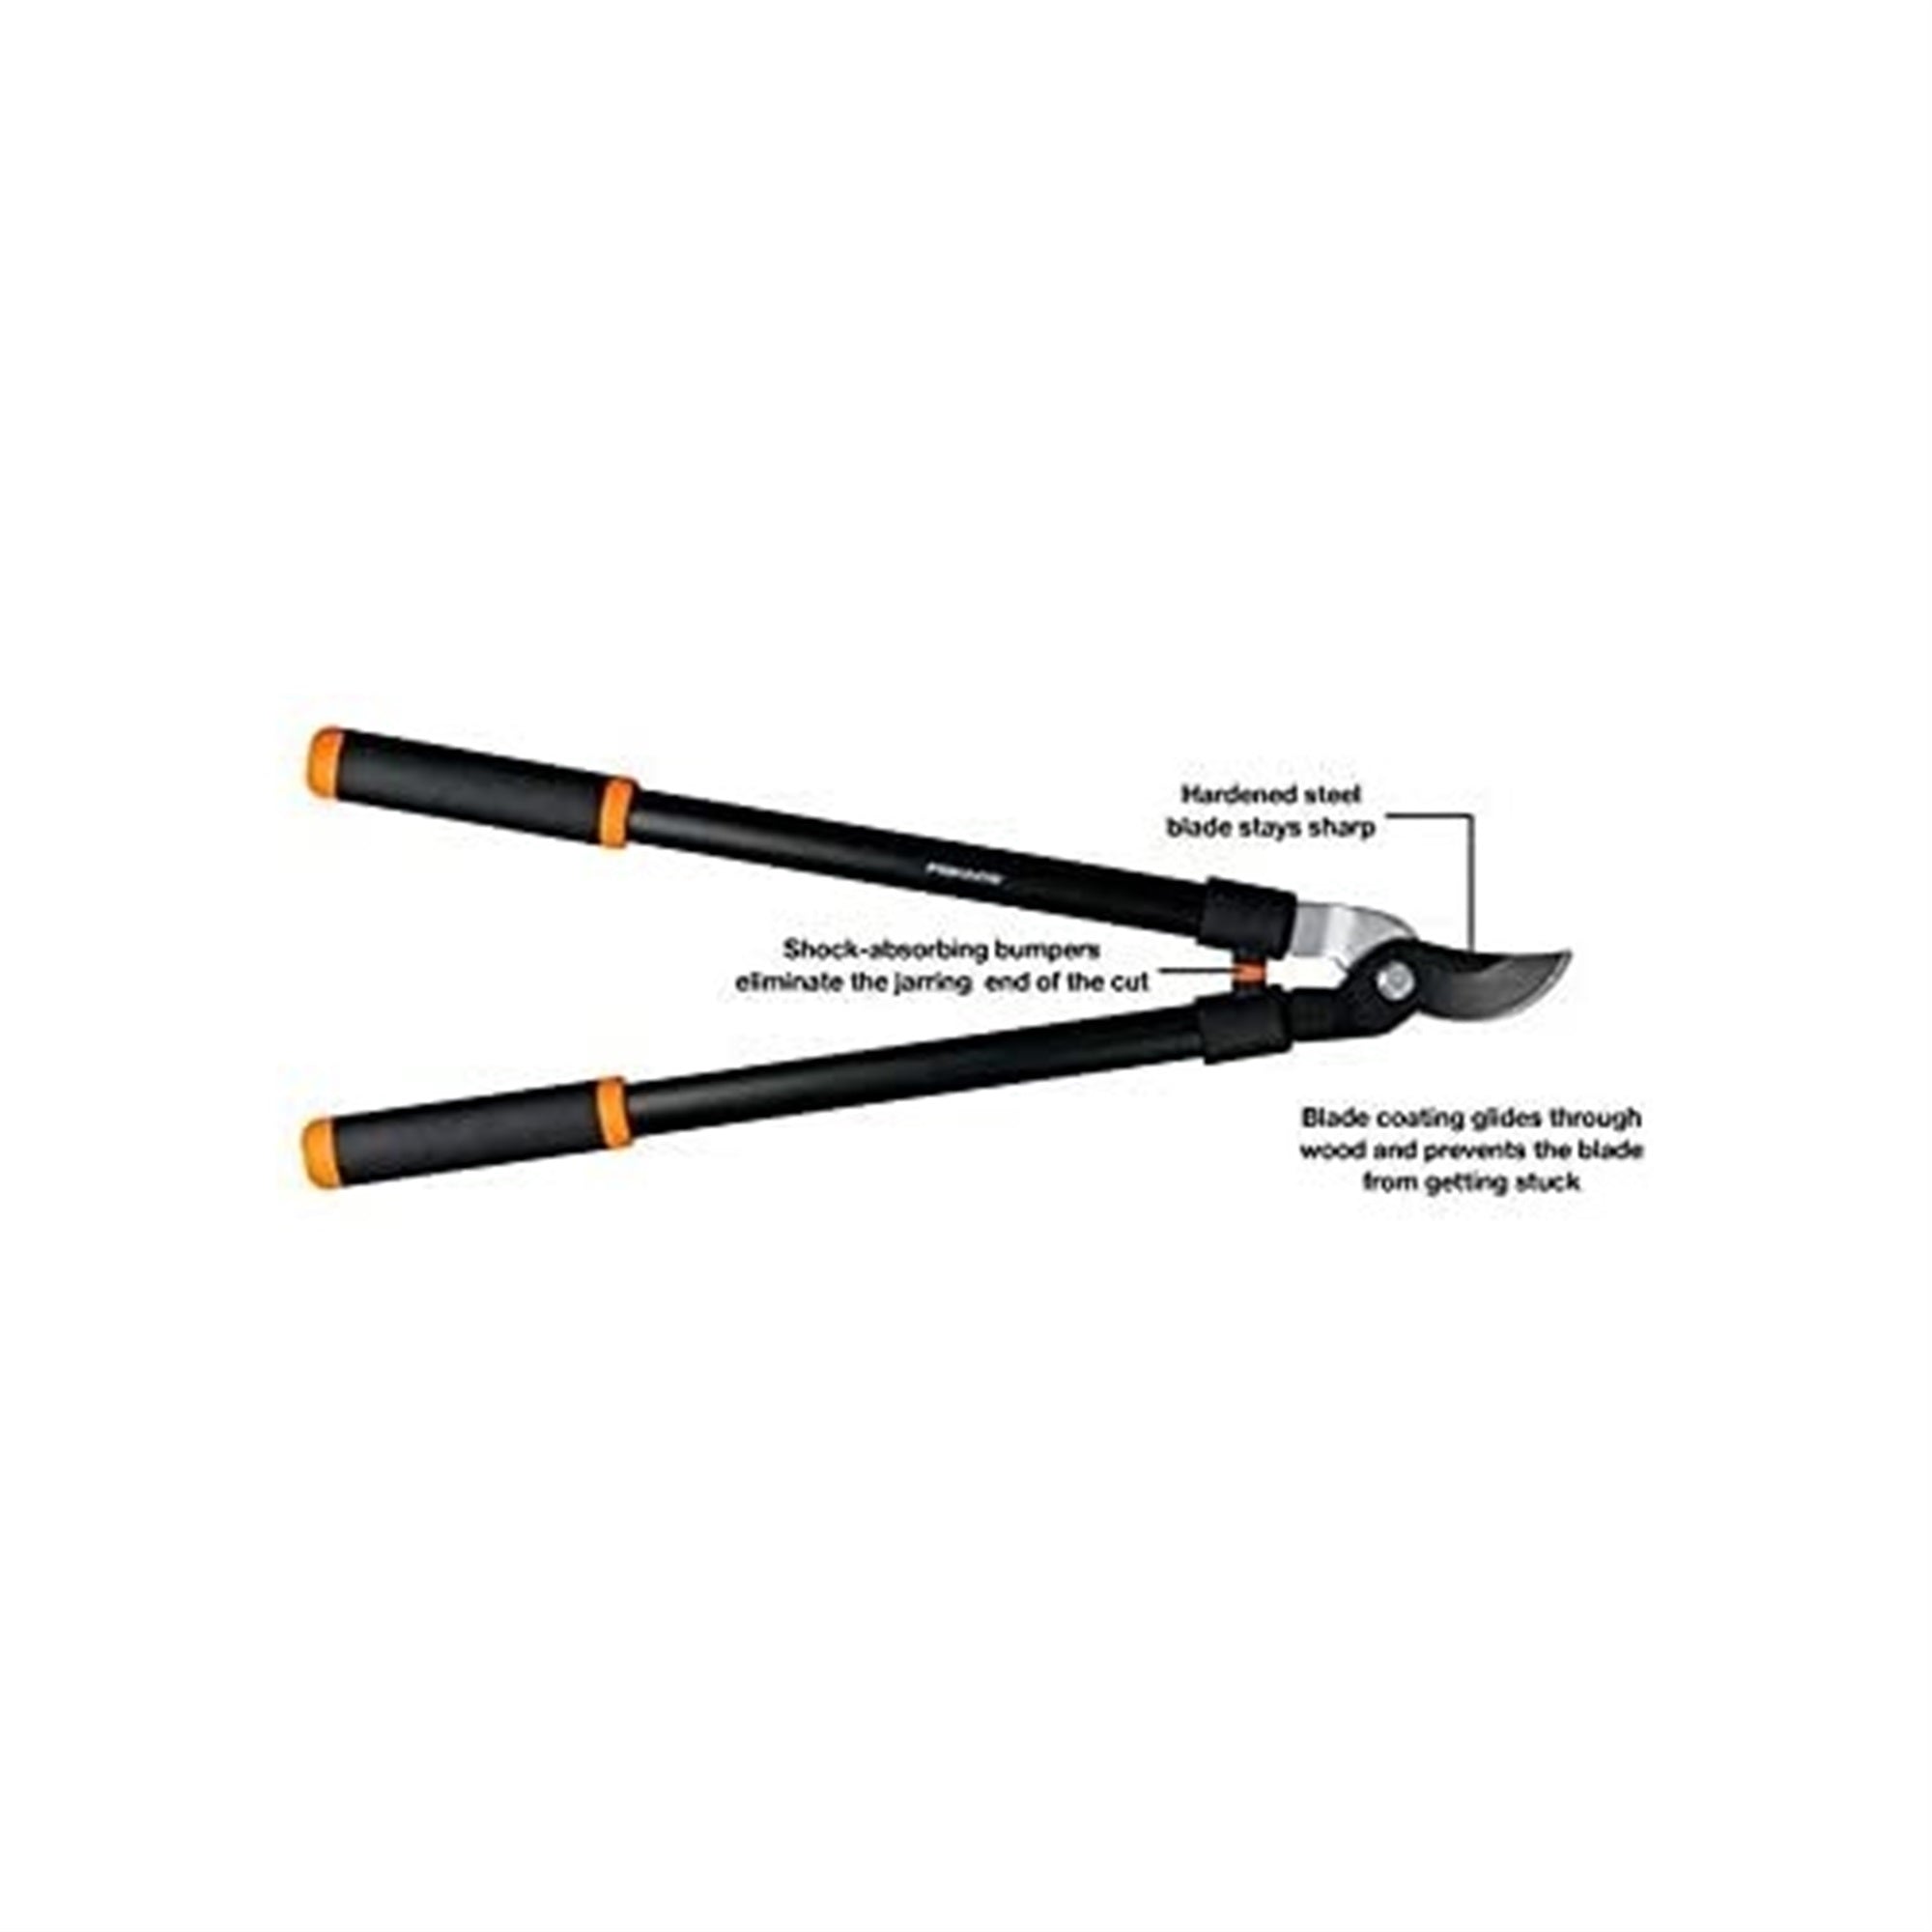 Fiskars 2-Piece Steel Blade Lopper and Pruner Tool Set